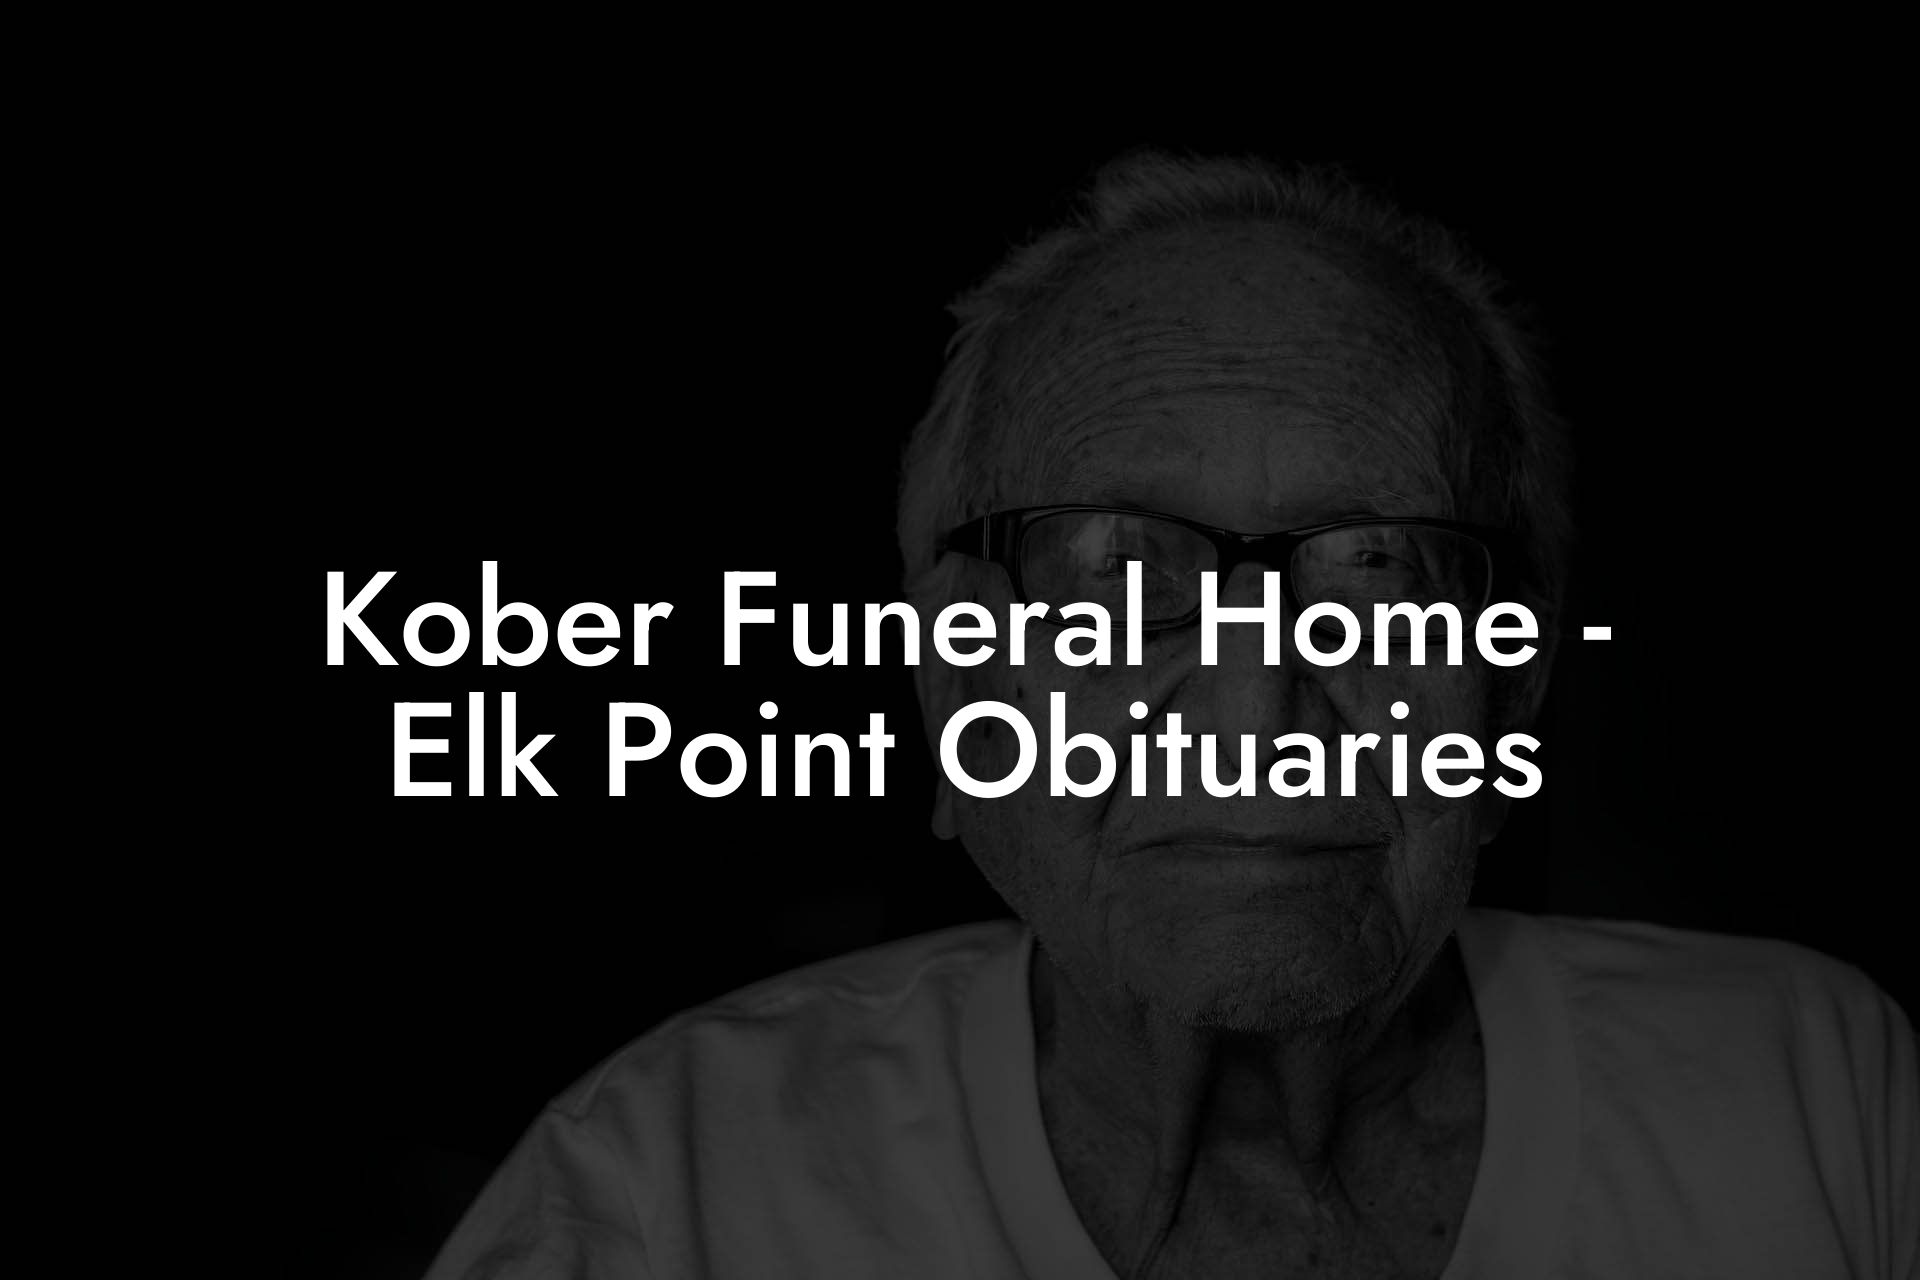 Kober Funeral Home - Elk Point Obituaries